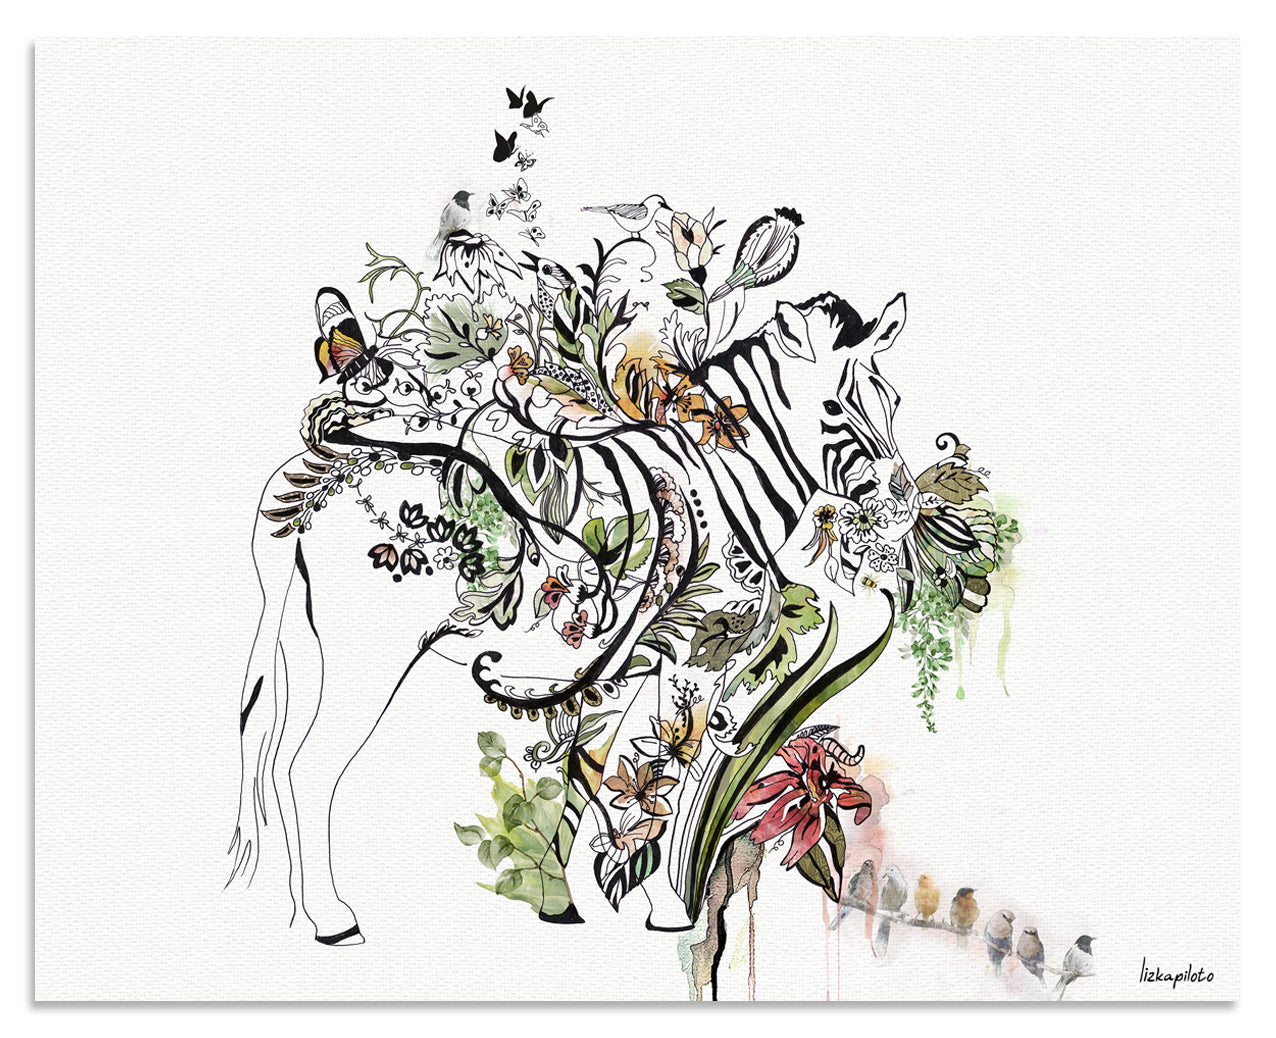 Zebra Painting - Liz Kapiloto Art & Design